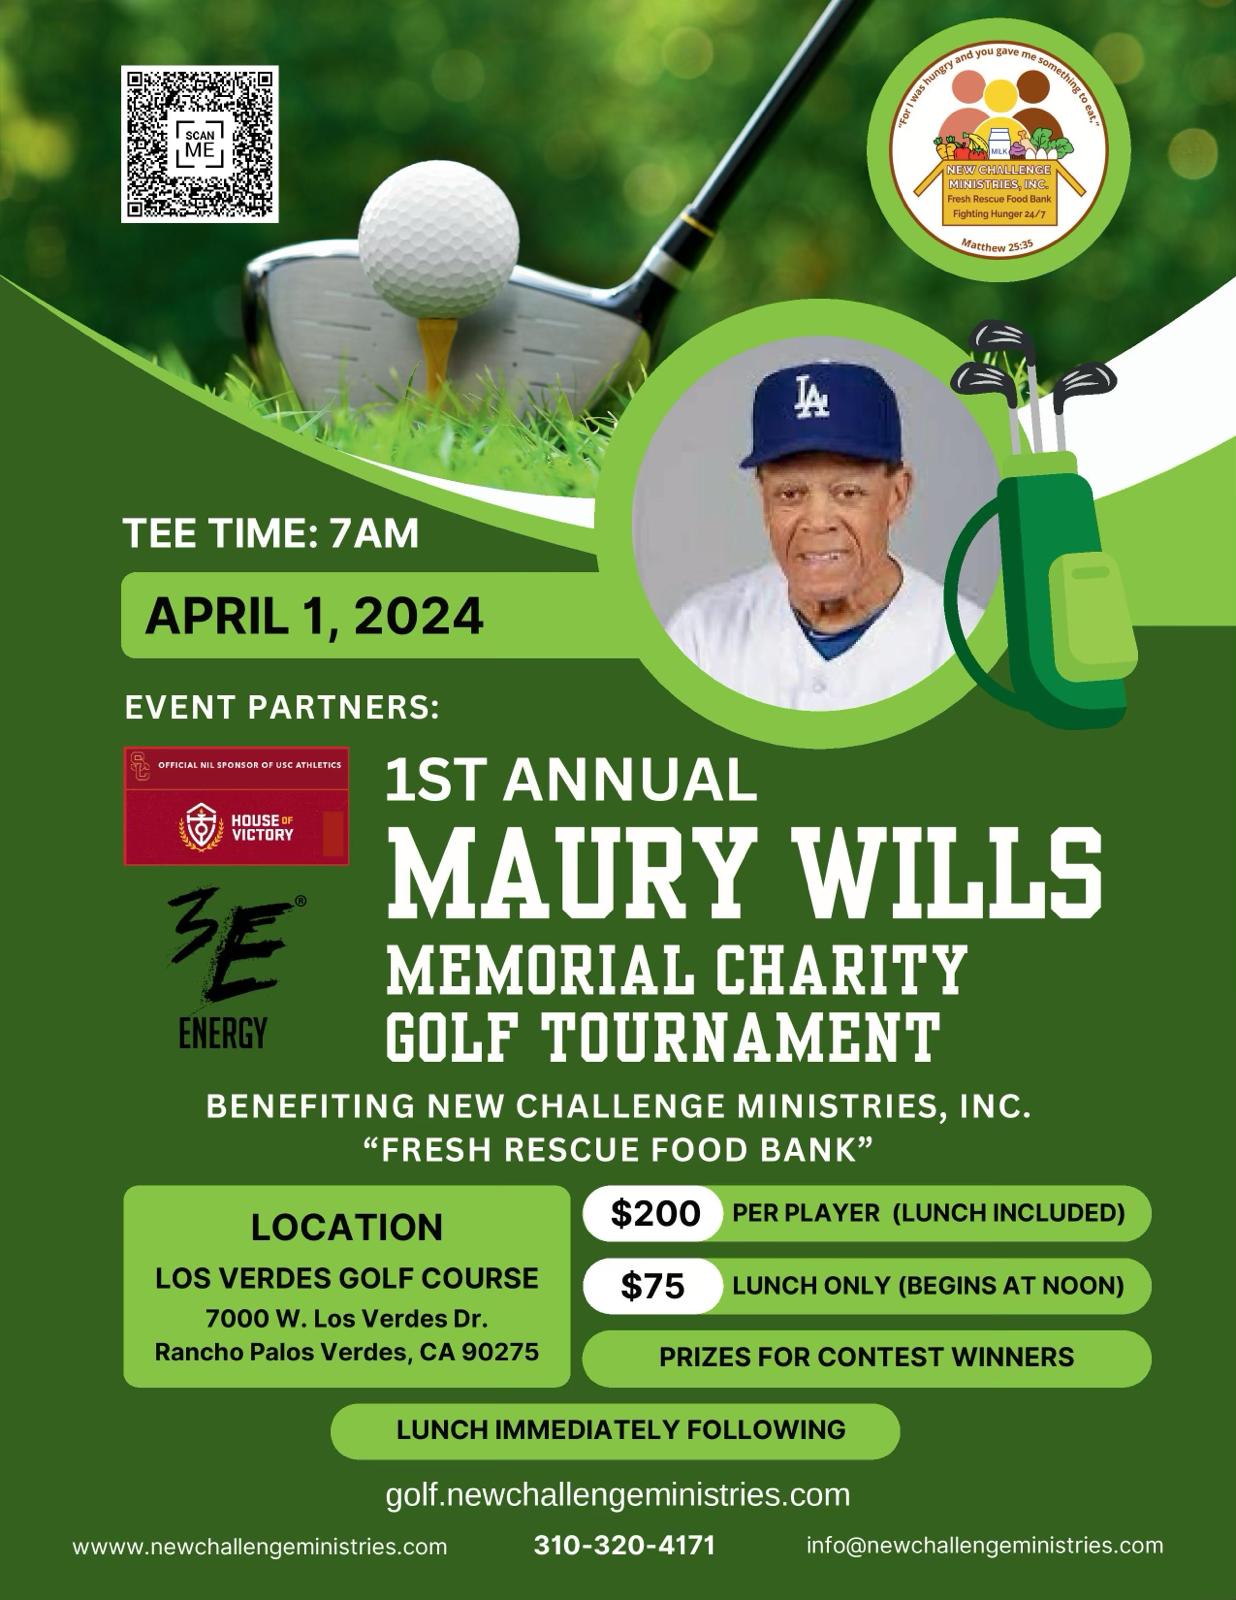 1st Annual Maury Wills Charity Golf Tournament